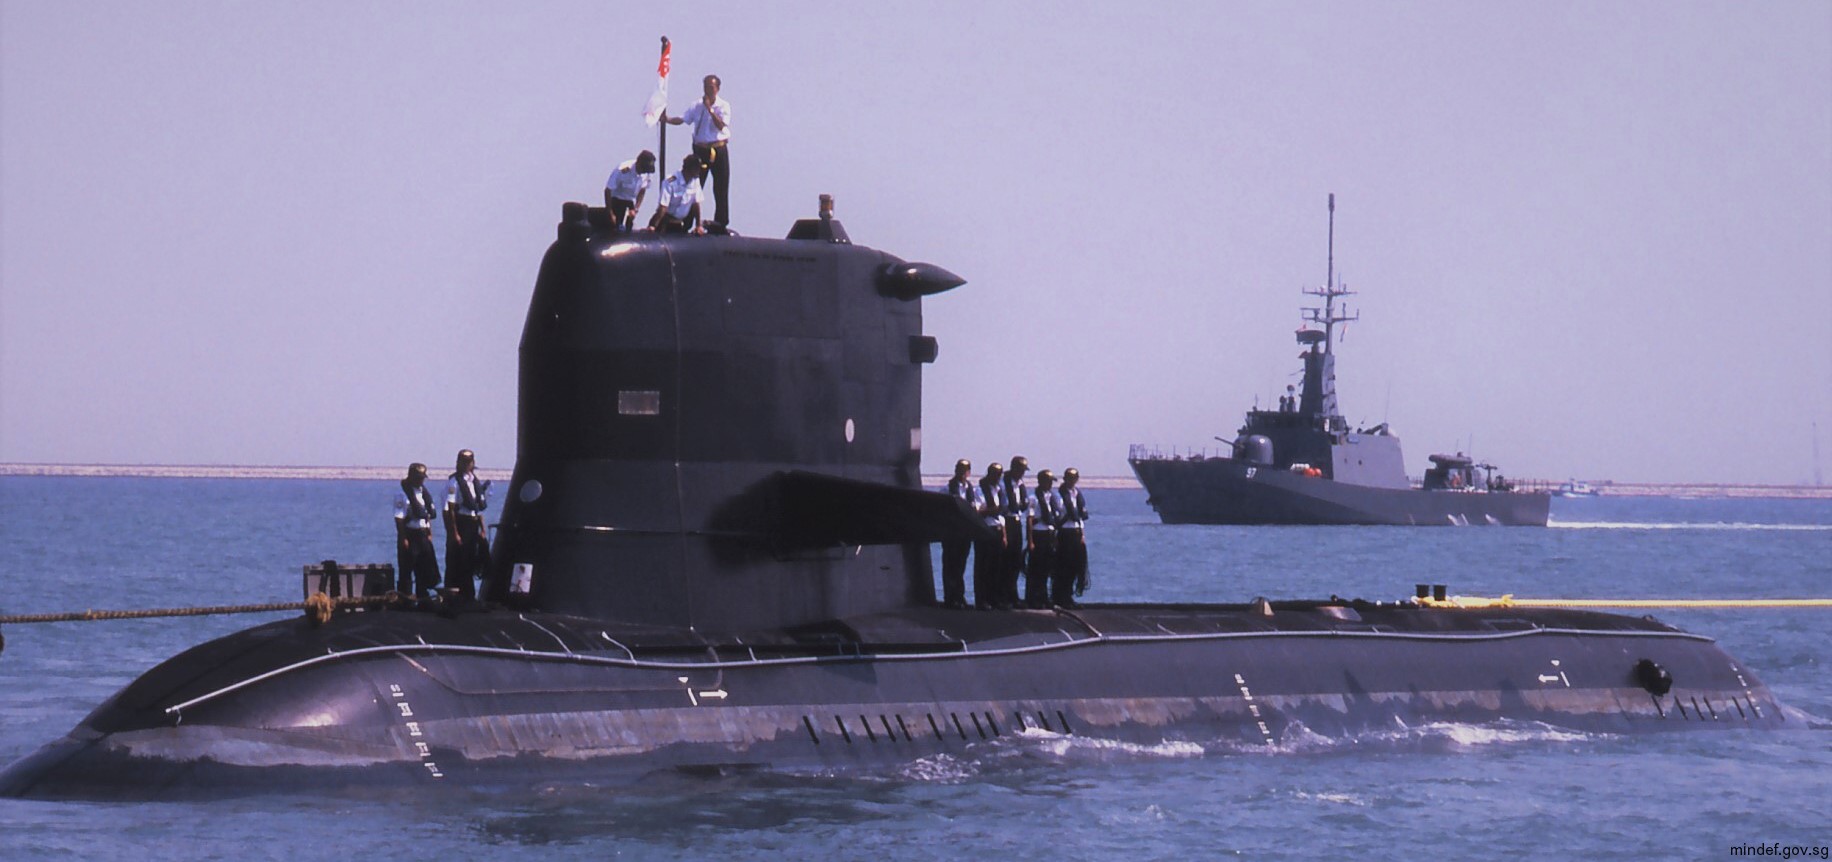 challenger class attack submarine rss conqueror chieftain centurion republic singapore navy 07